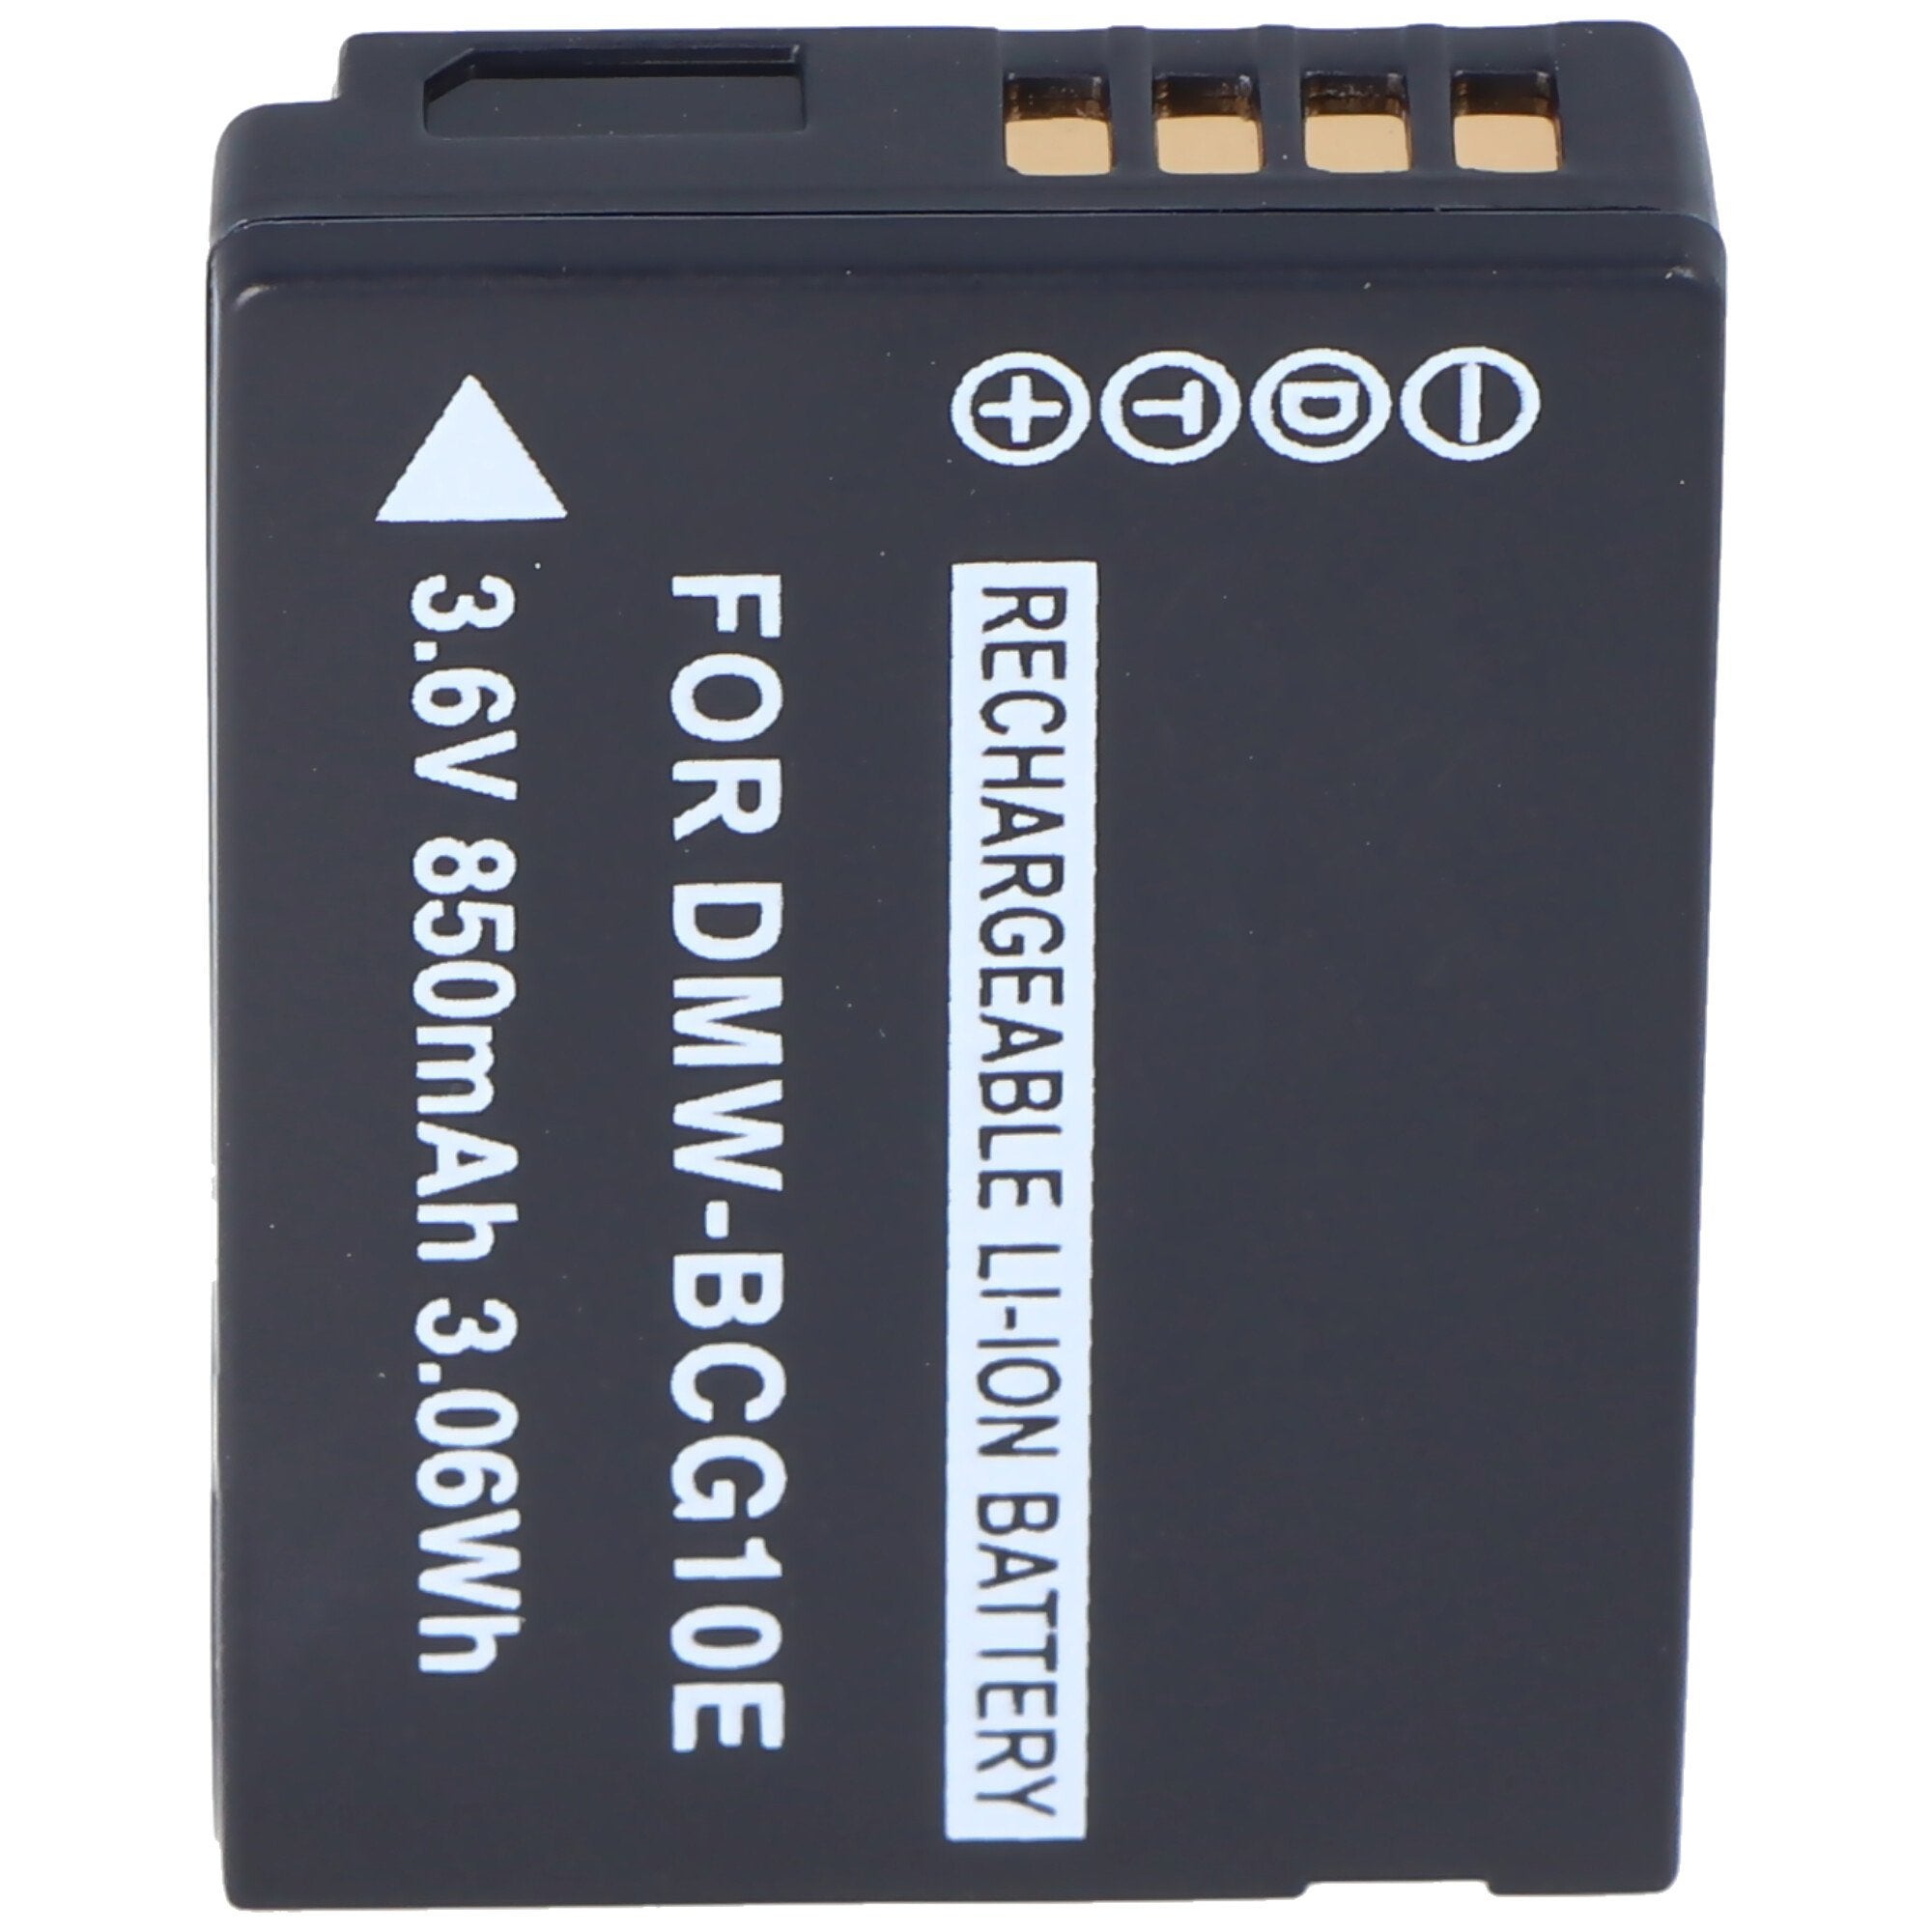 Battery suitable for Panasonic DMC-TZ10, DMW-BCG10, DMW-BCG10PP